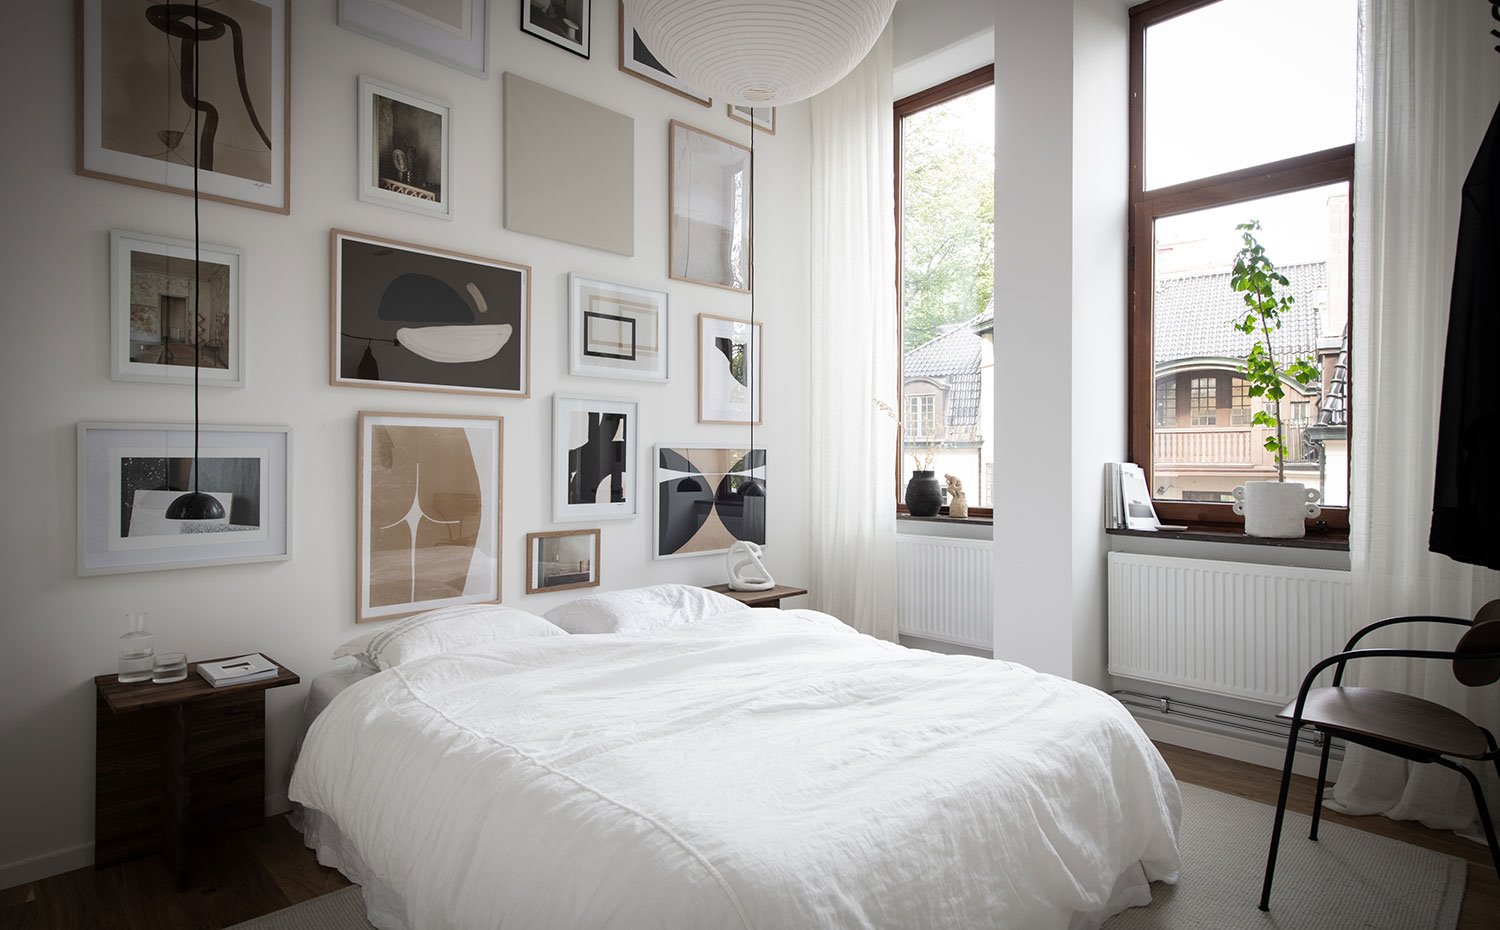 Dormitorio con frente de pared con láminas de diferentes tamaños, mesillas de madera, cortinas blancas